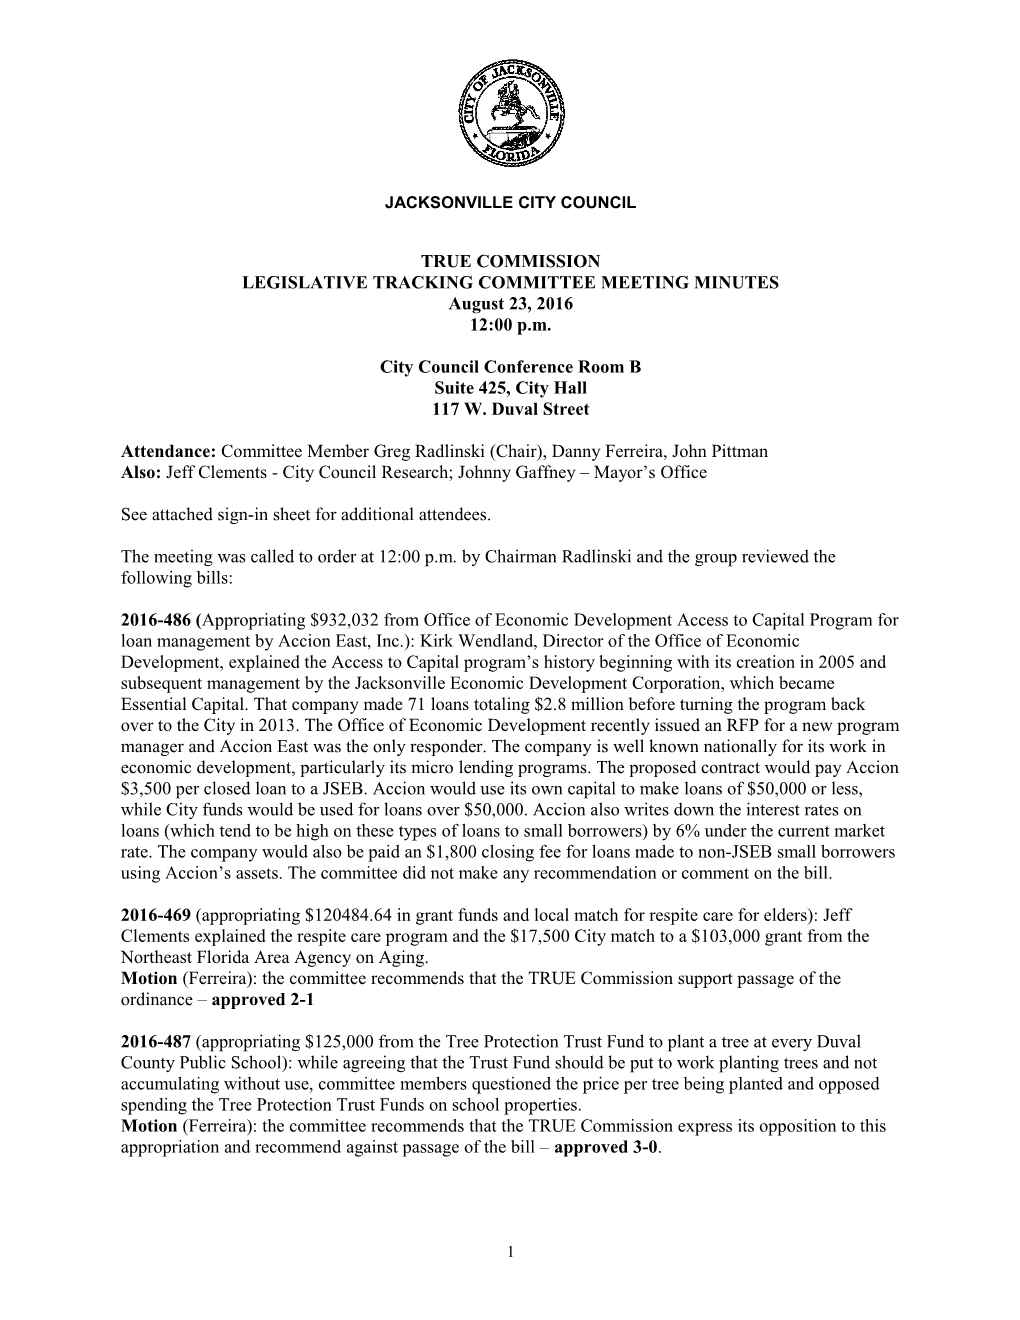 Legislative Tracking Committee Meeting Minutes